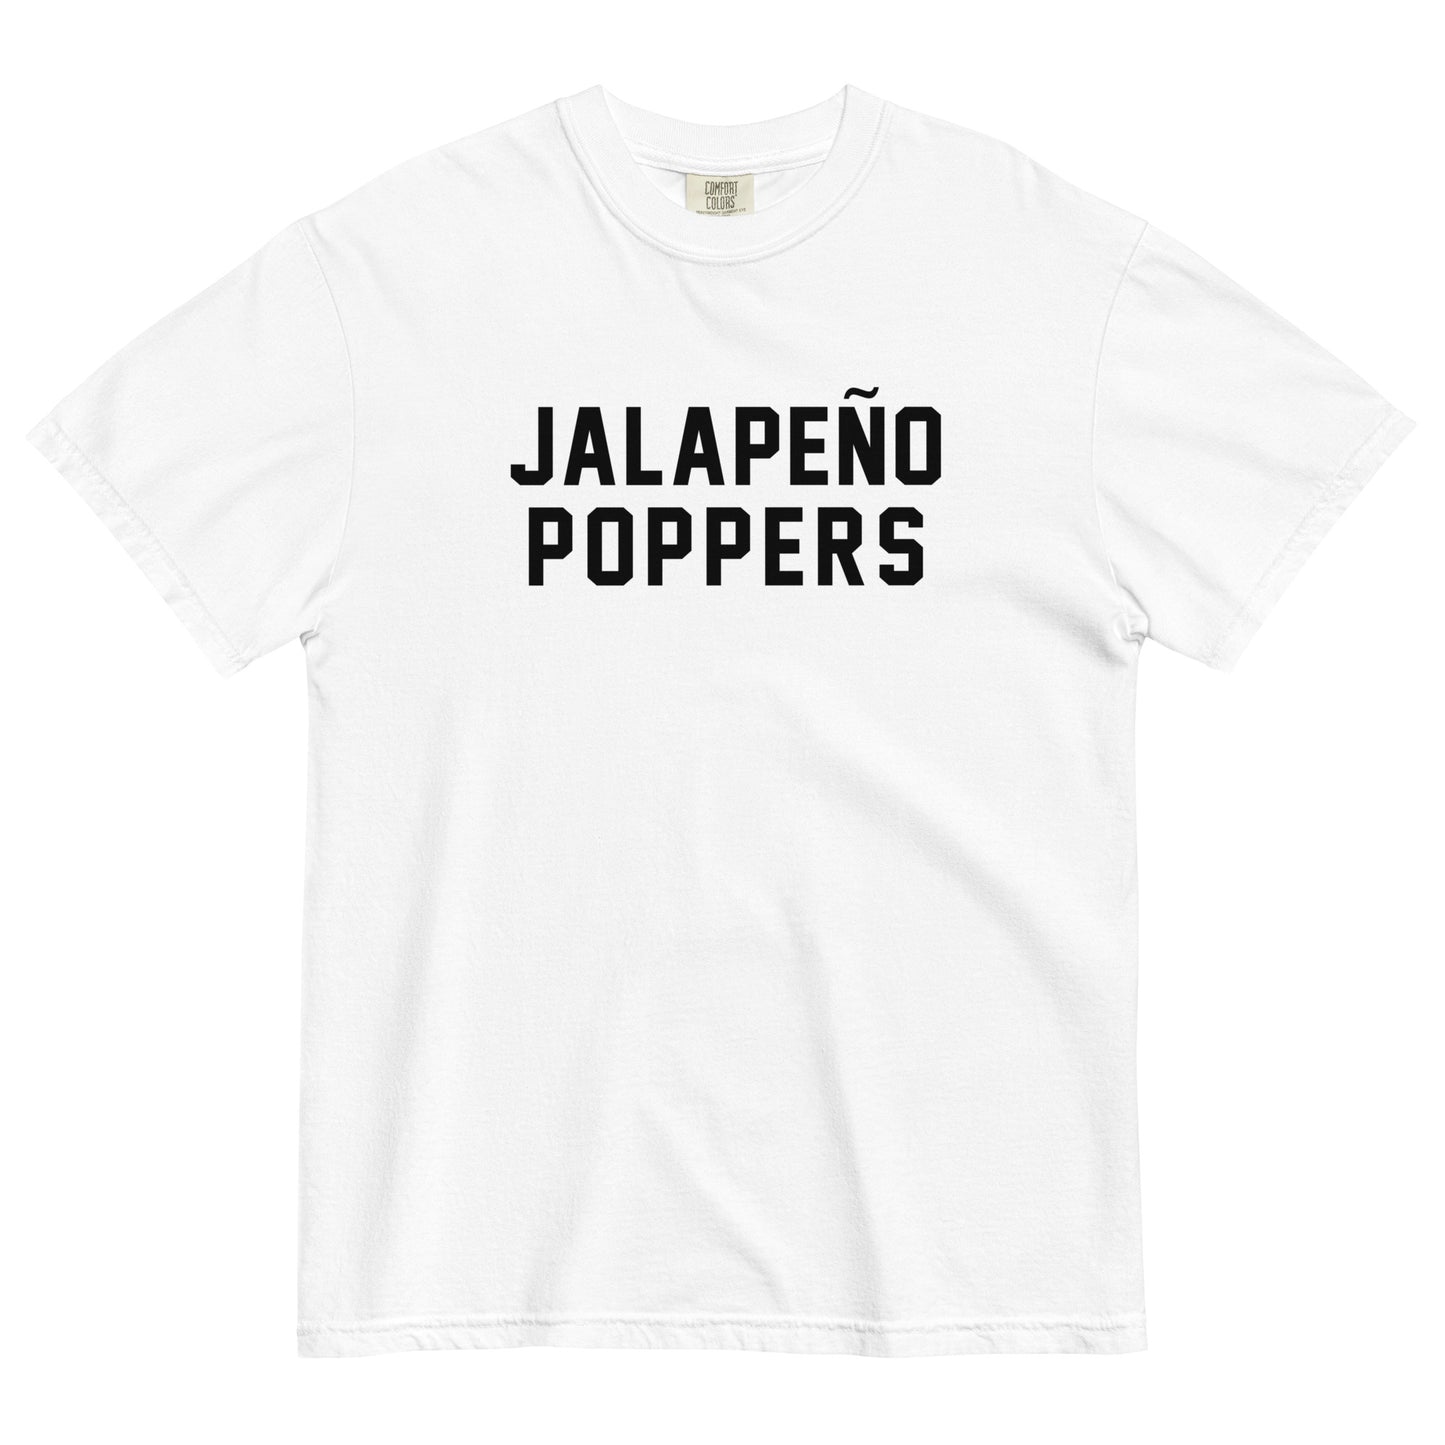 JALAPEÑO POPPERS